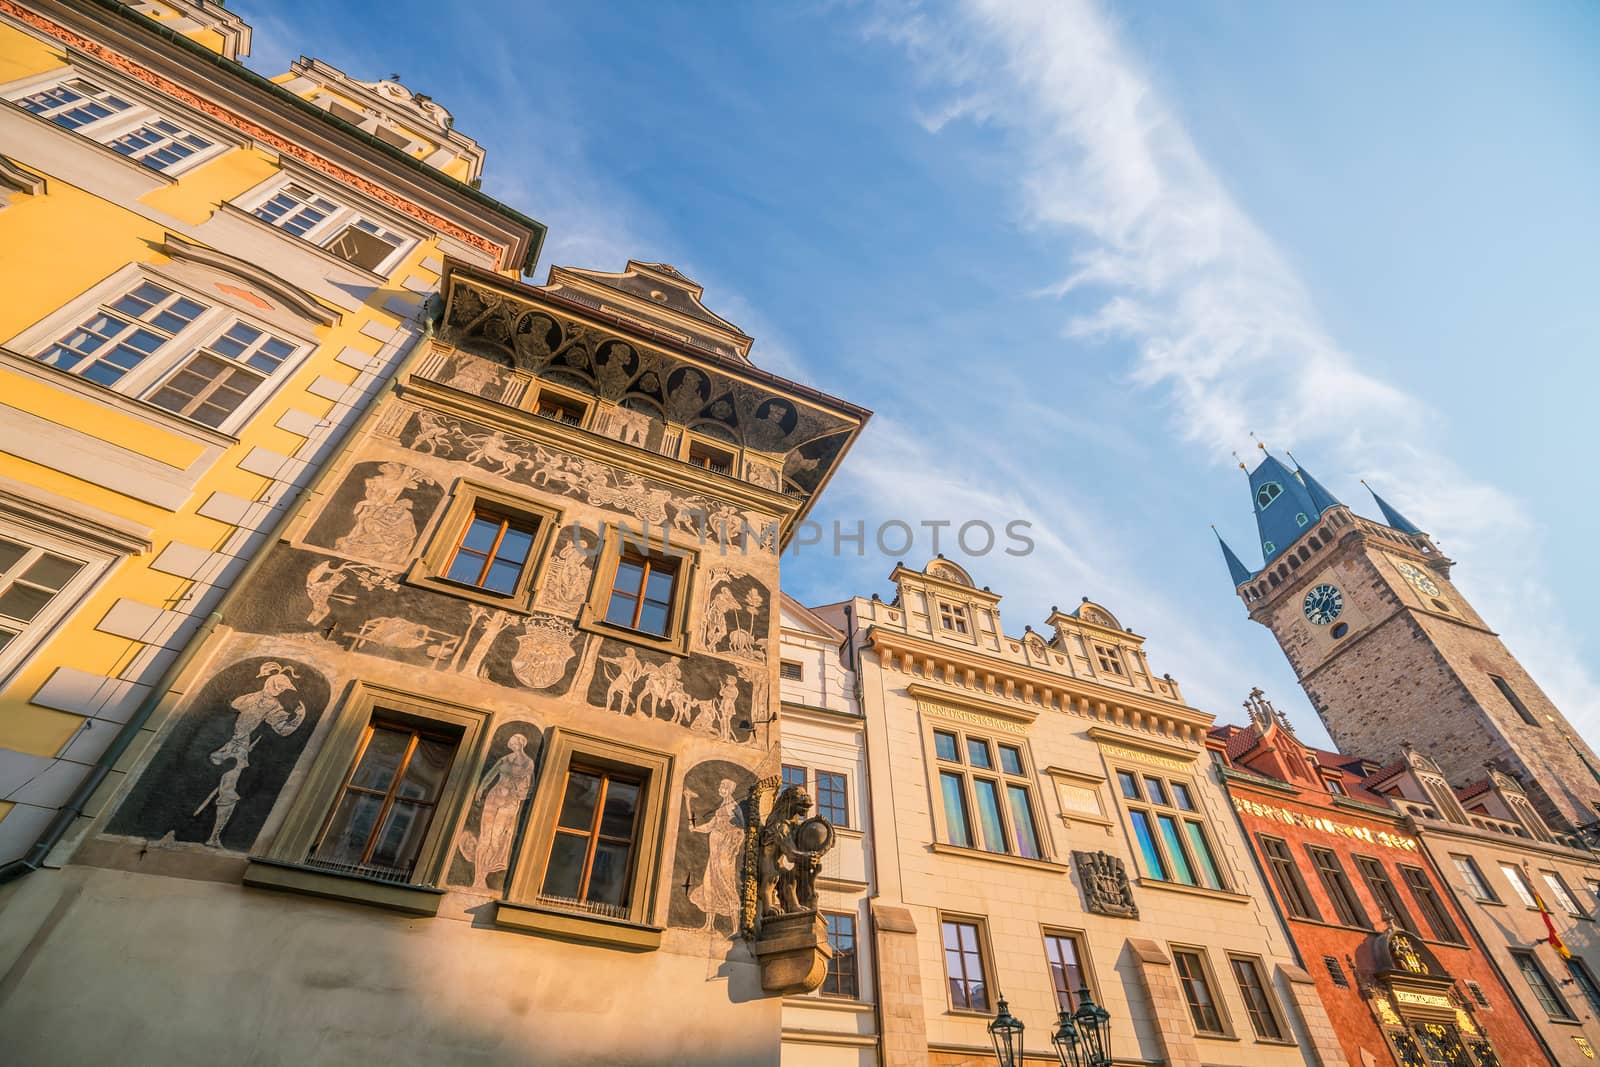 PRAGUE, CZECH REPUBLIC - AUGUST 19, 2018: Heritage buildings in Old Town of Prague in Czech Republic.